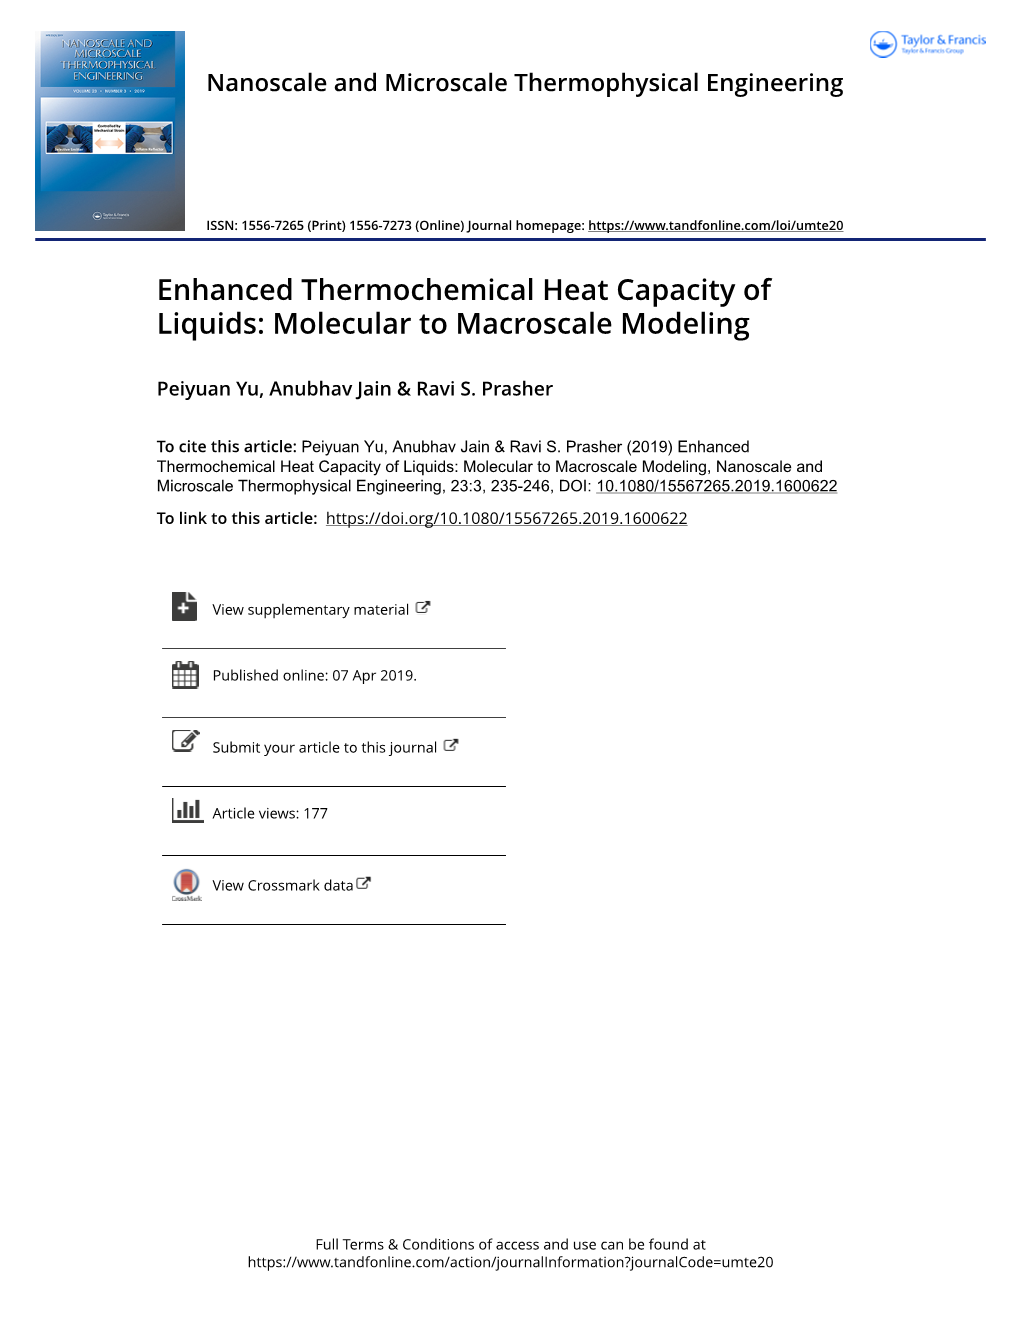 Enhanced Thermochemical Heat Capacity of Liquids: Molecular to Macroscale Modeling